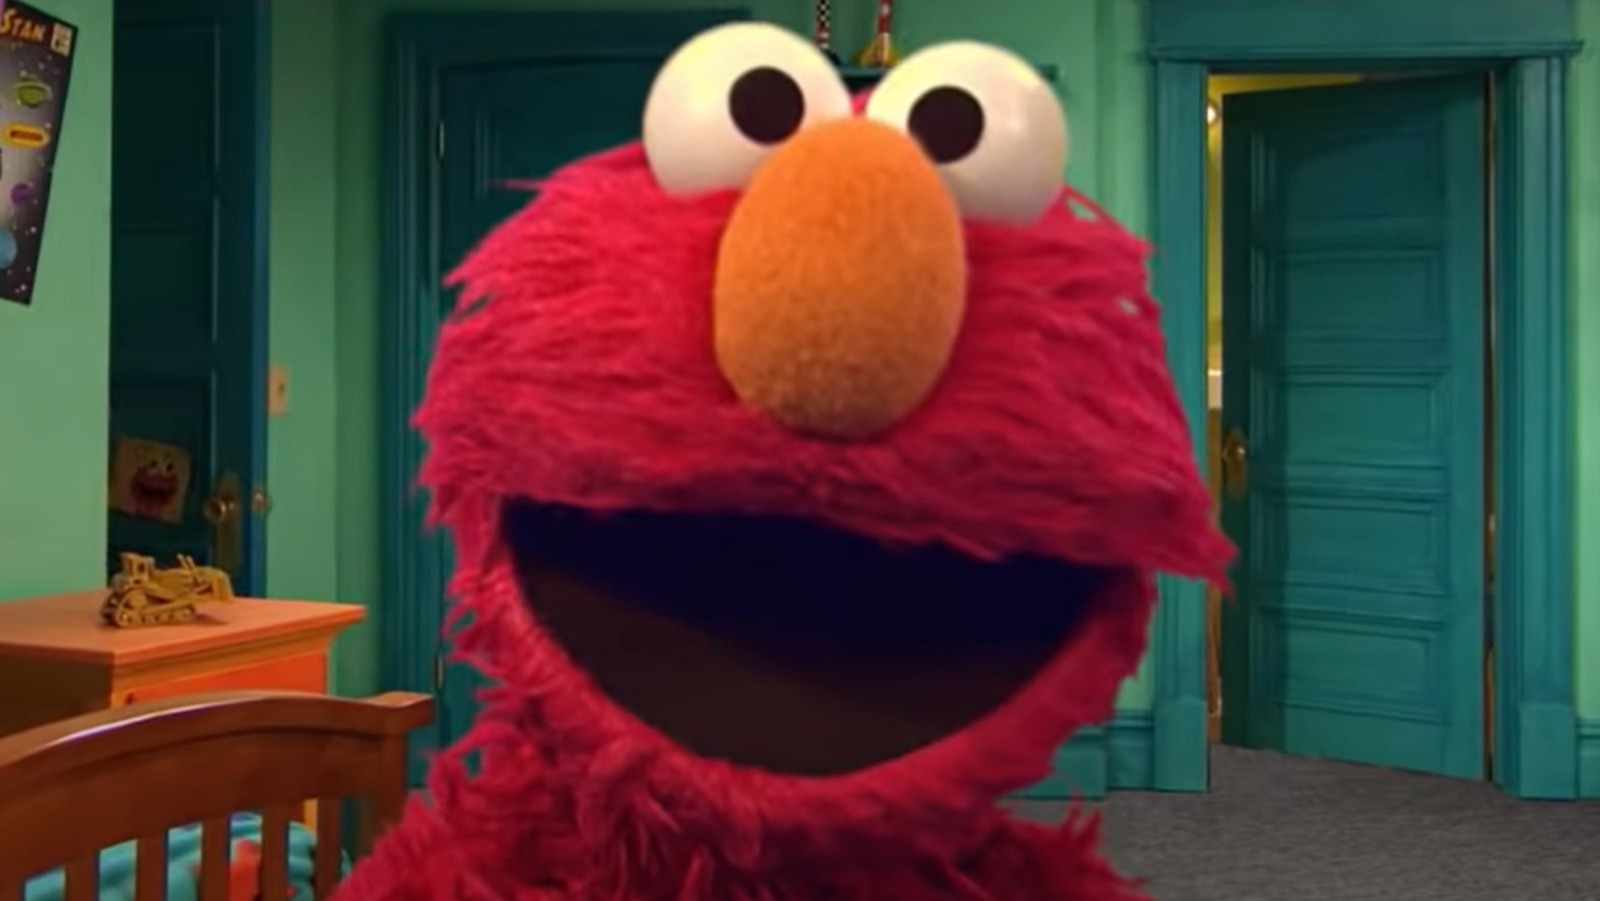 Who Actually Voices Elmo From Sesame Street?